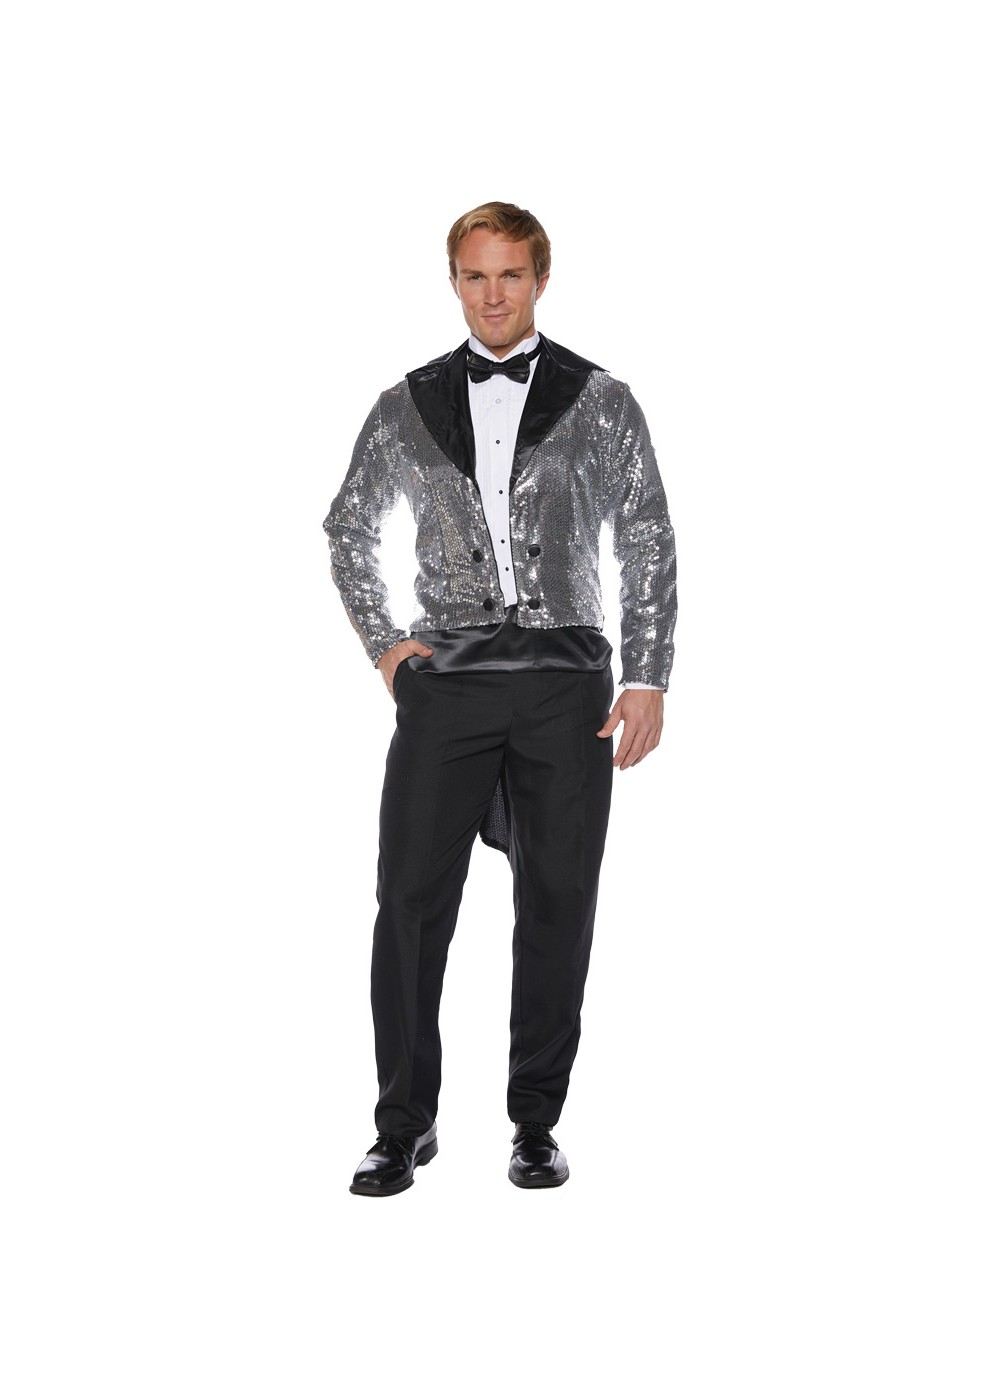 Silver Sequin Tails Men Jacket - Dancewear Costumes